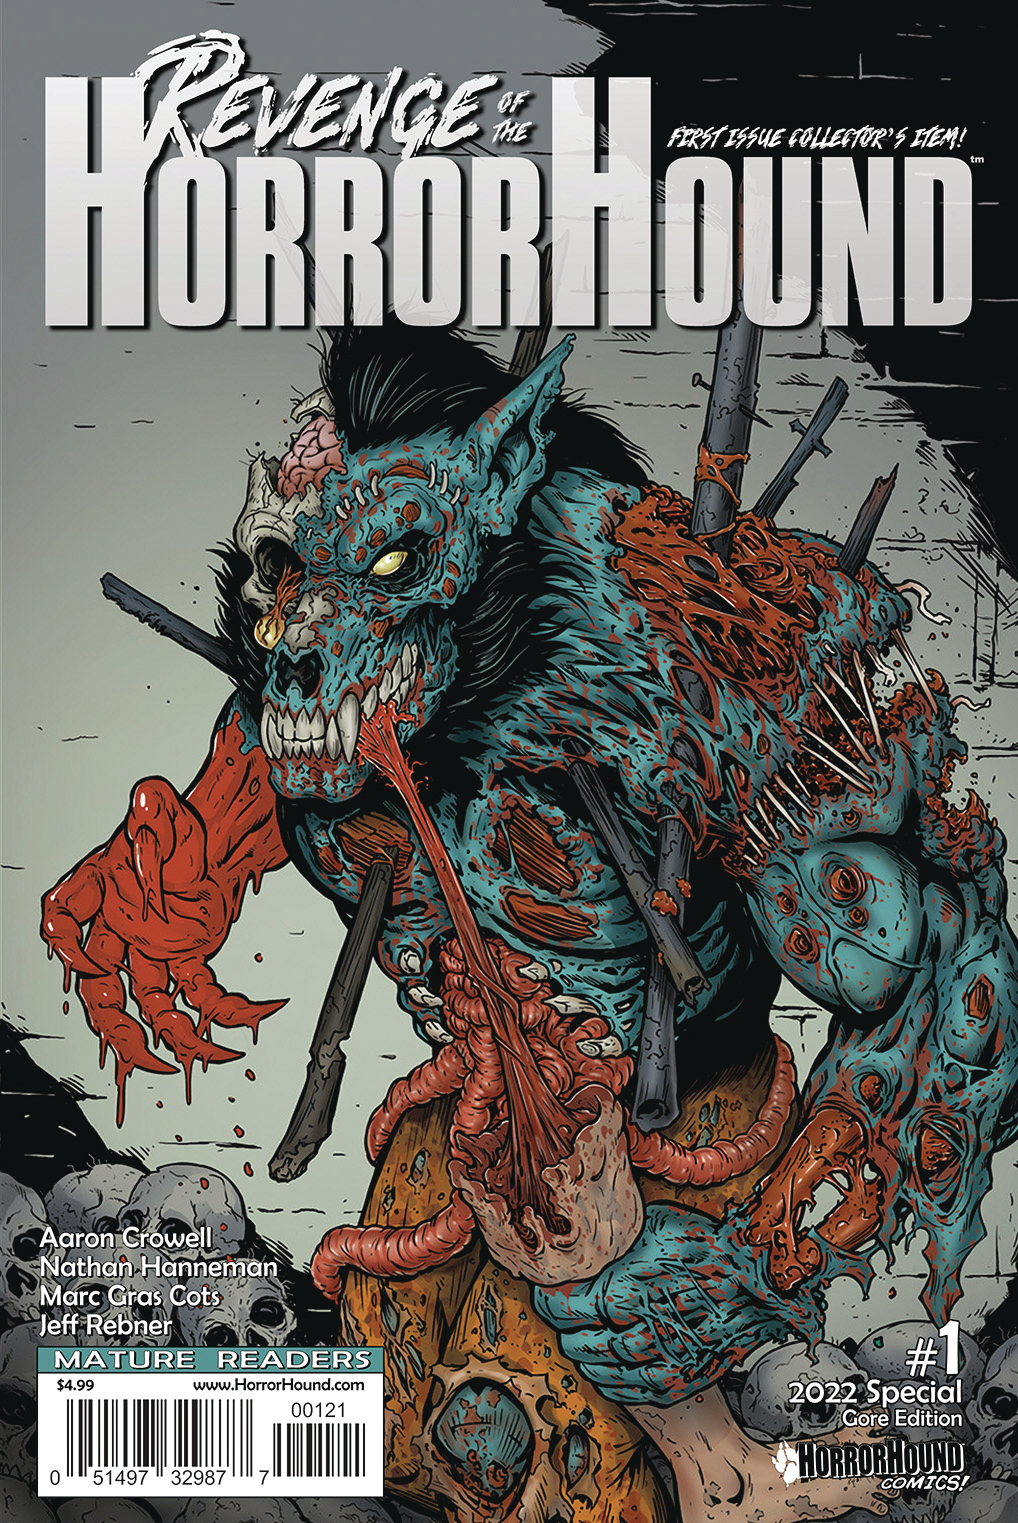 Revenge of the Horrorhound One Shot #0 Cover B Rebner (Mature)